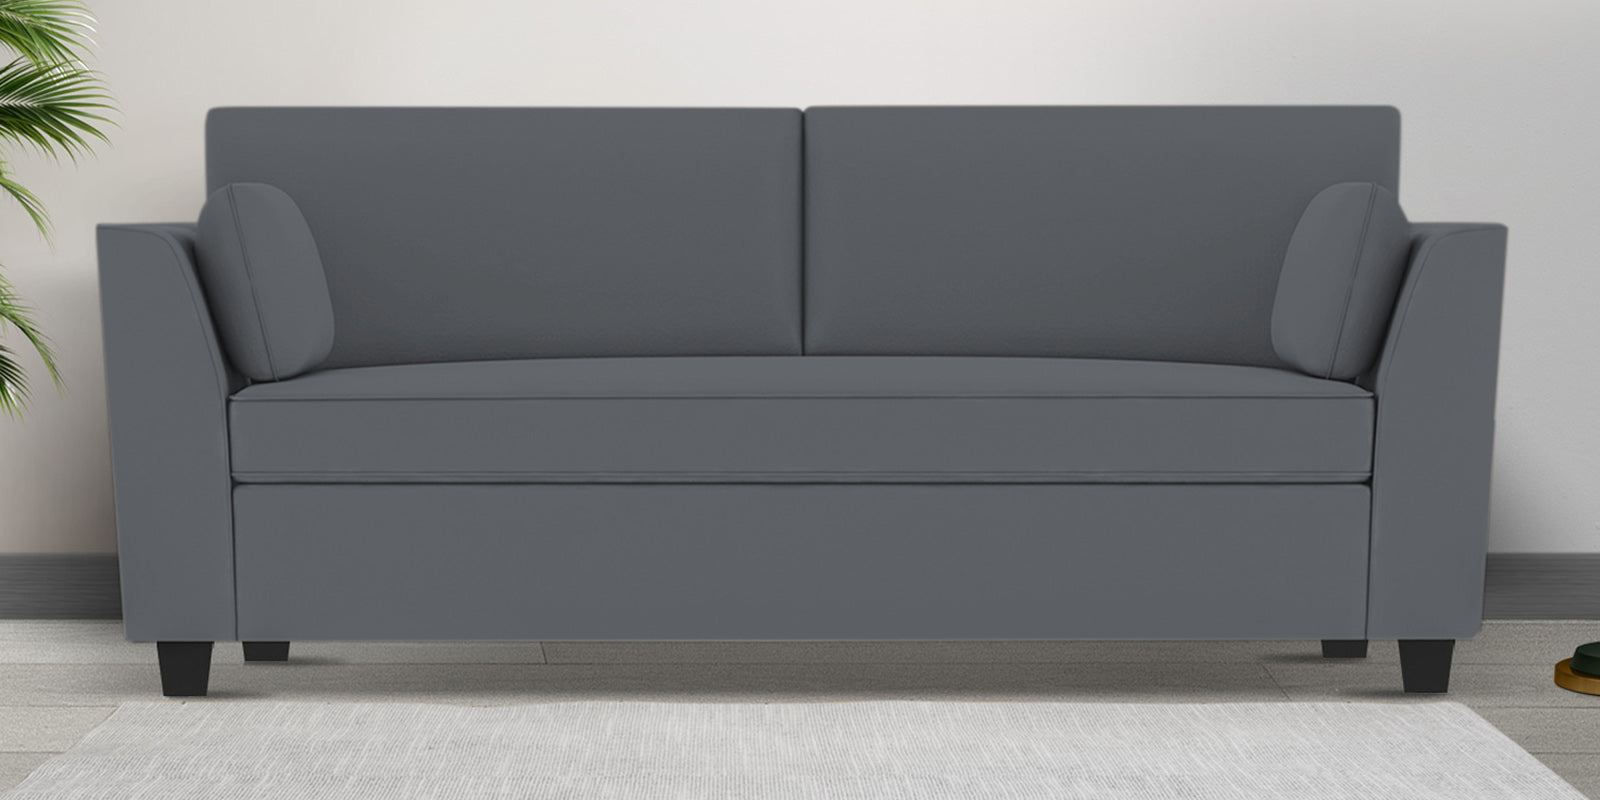 Bristo Velvet 3 Seater Sofa in pubble grey Colour With Storage